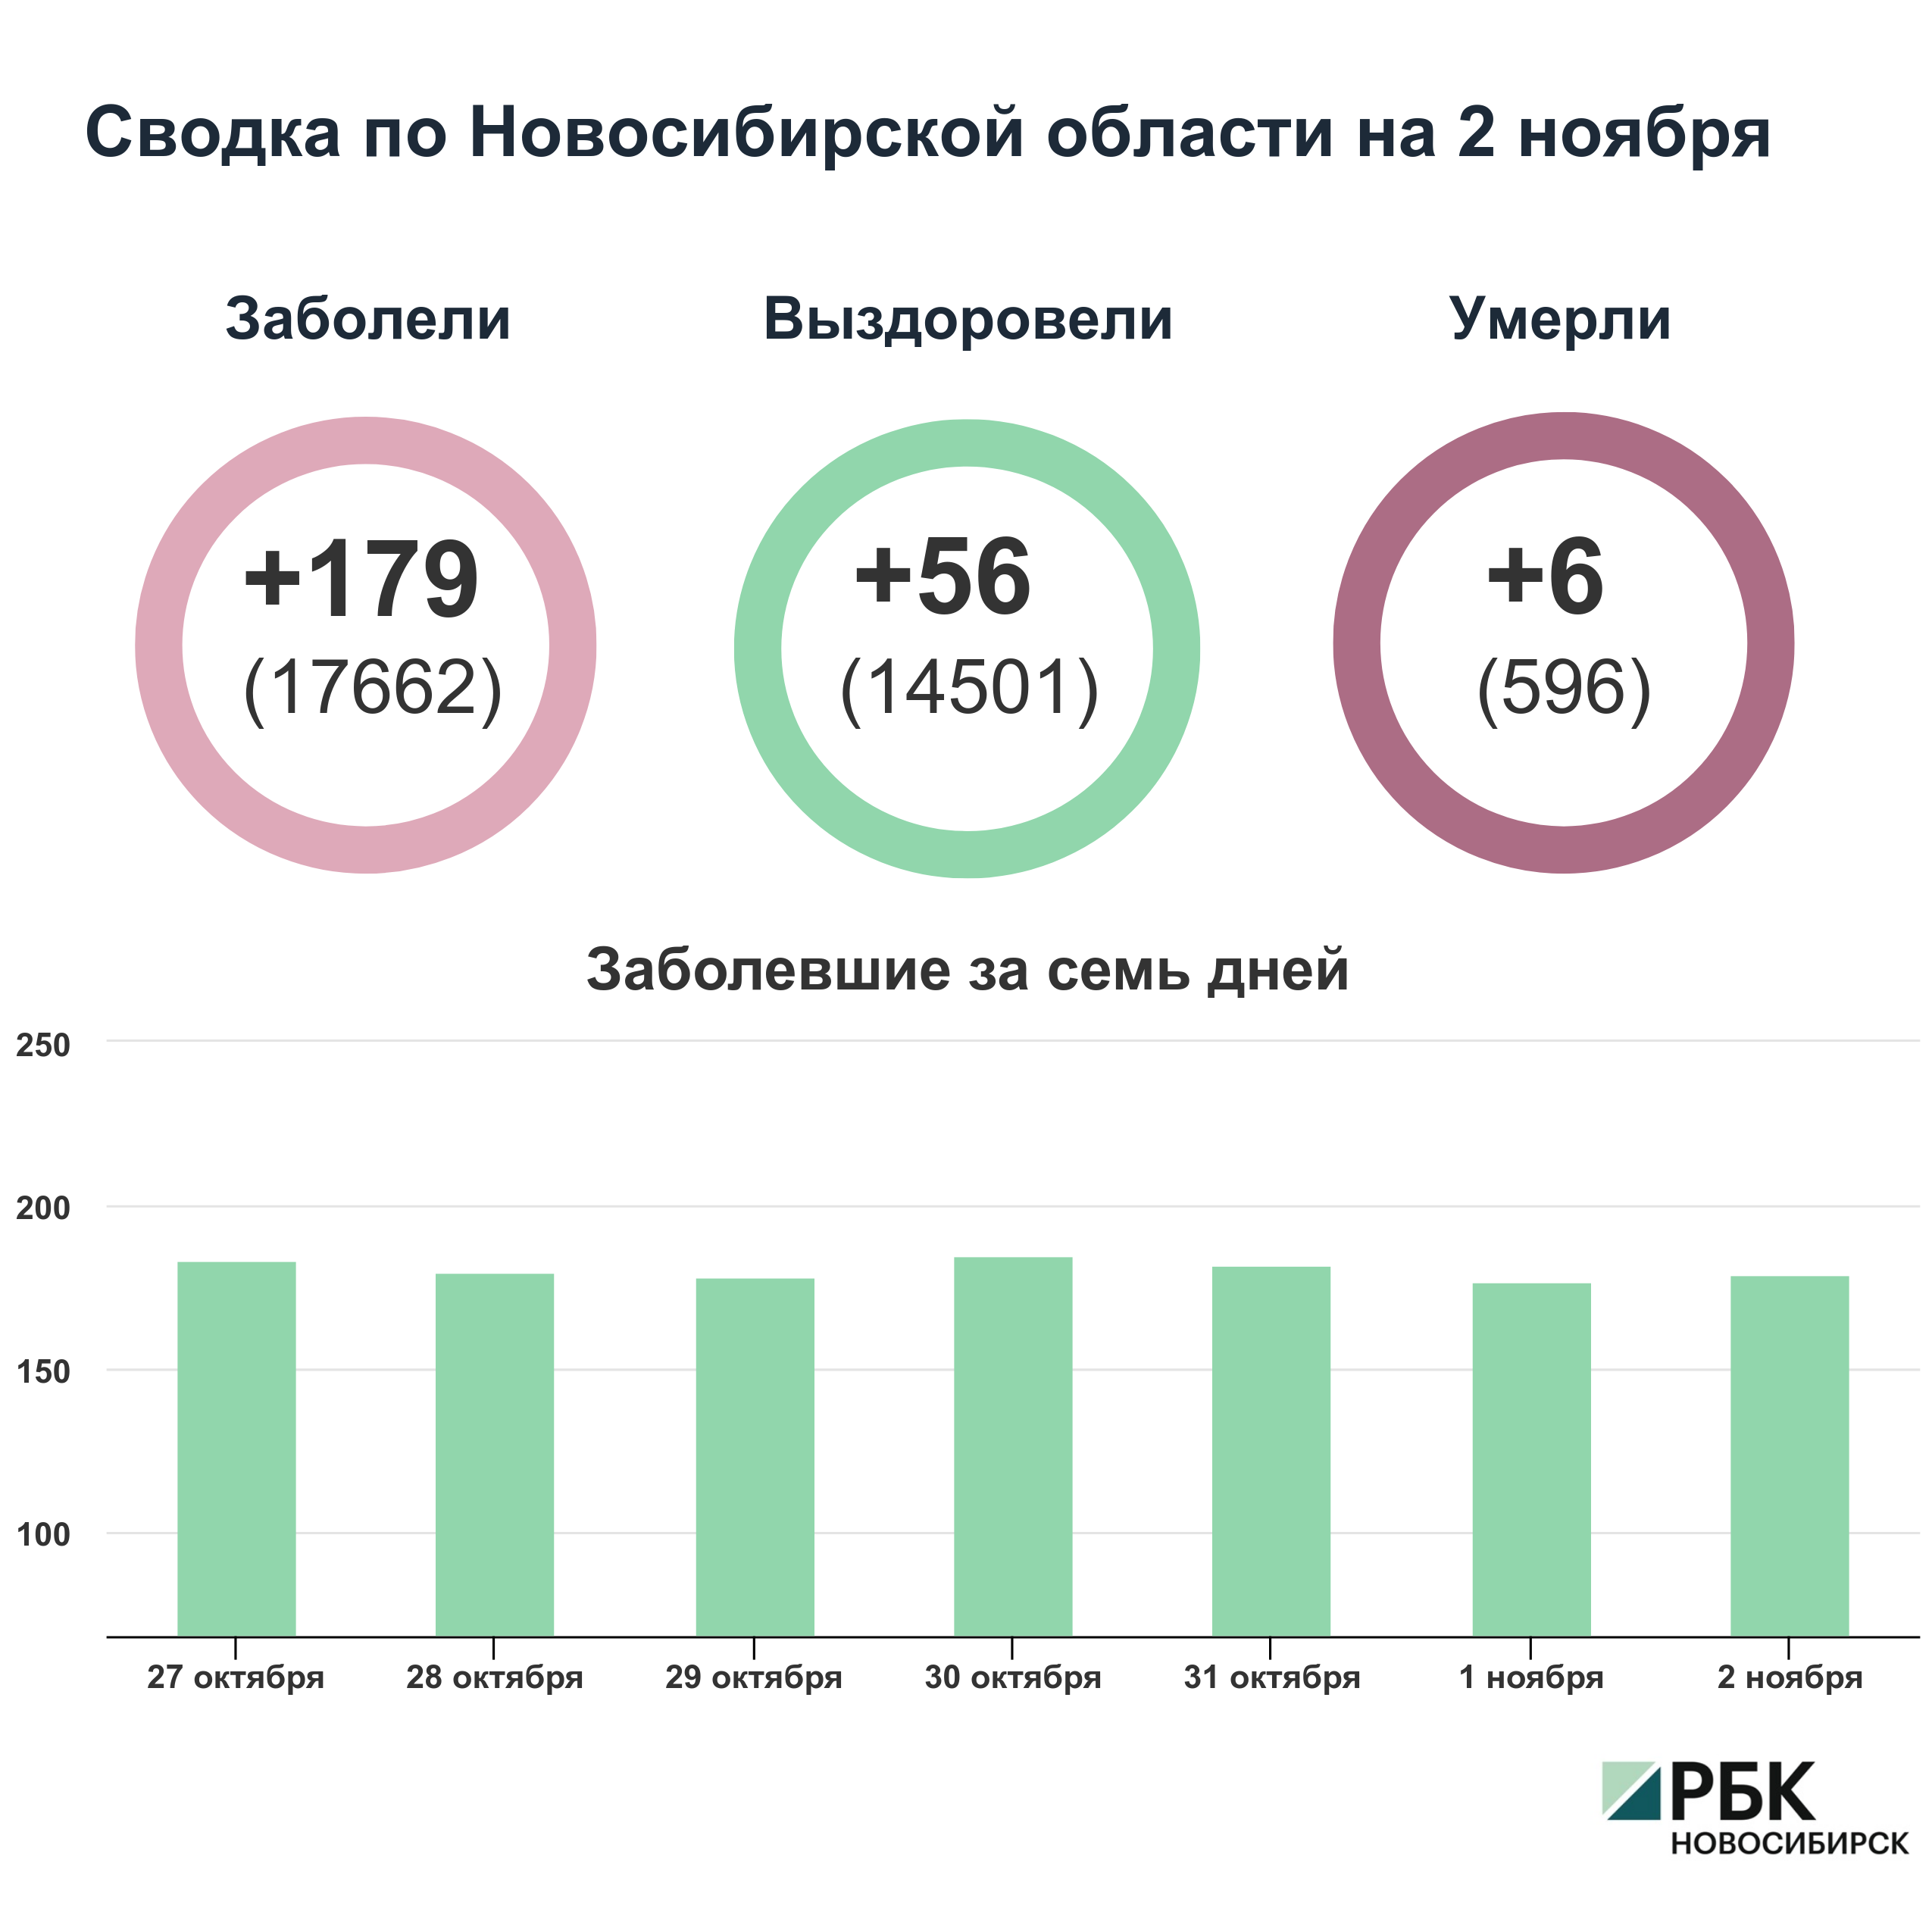 Коронавирус в Новосибирске: сводка на 2 ноября